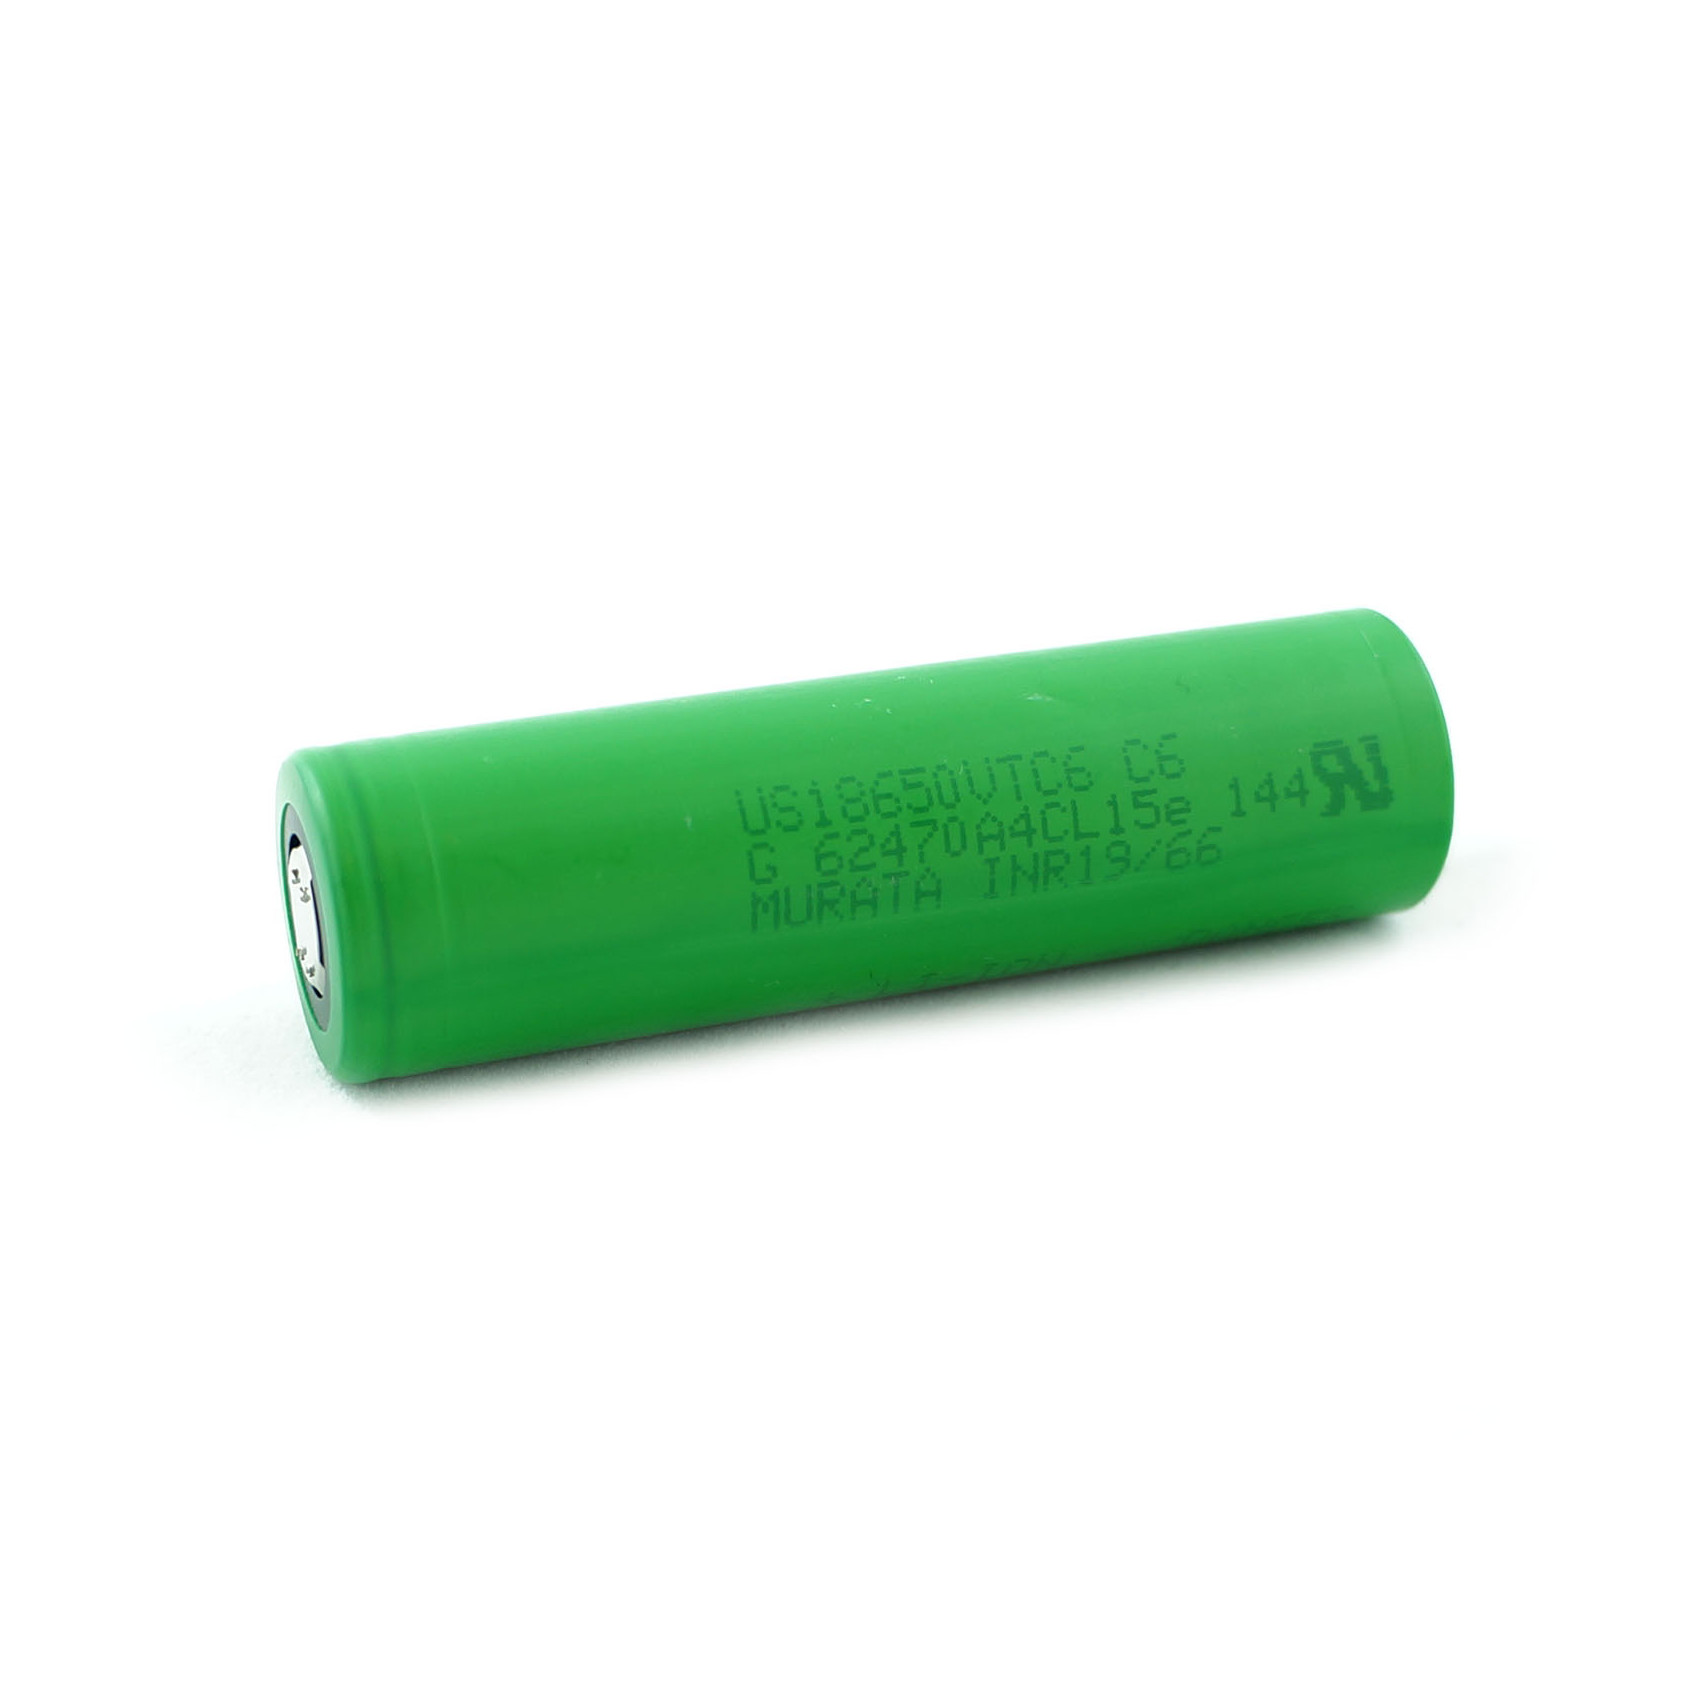 Batterie 18650 3000mAh - Sony - Lunettes FPV